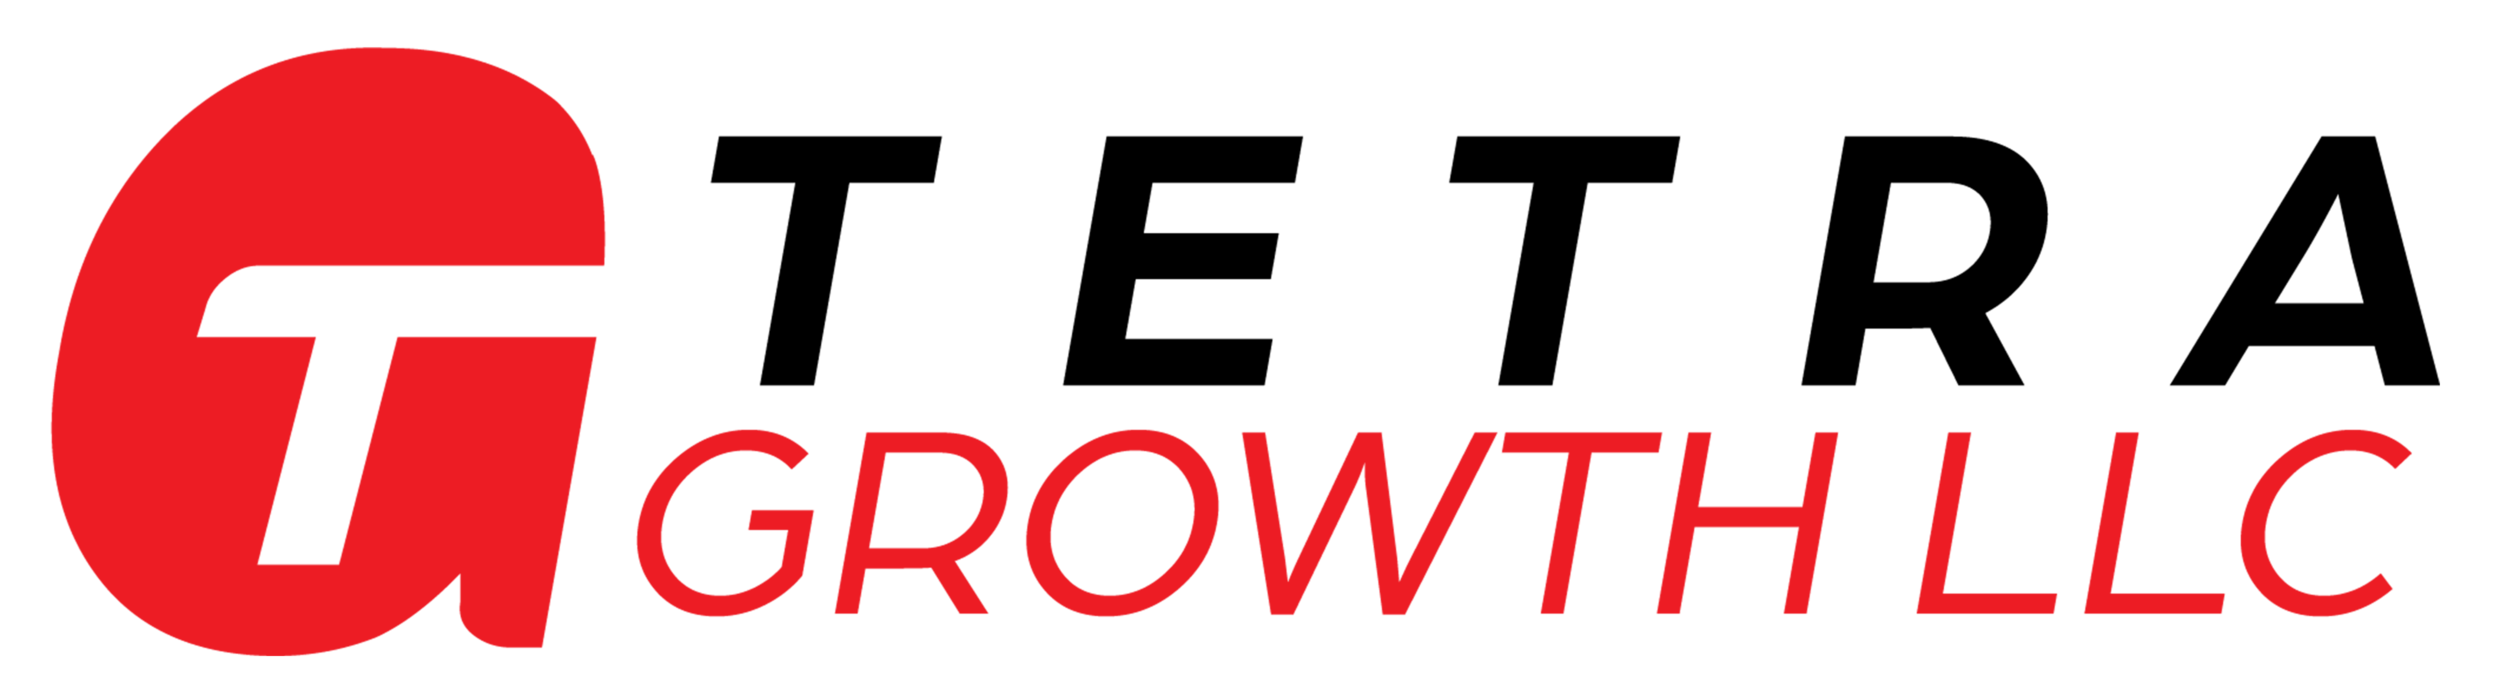 Tetra Growth LLC